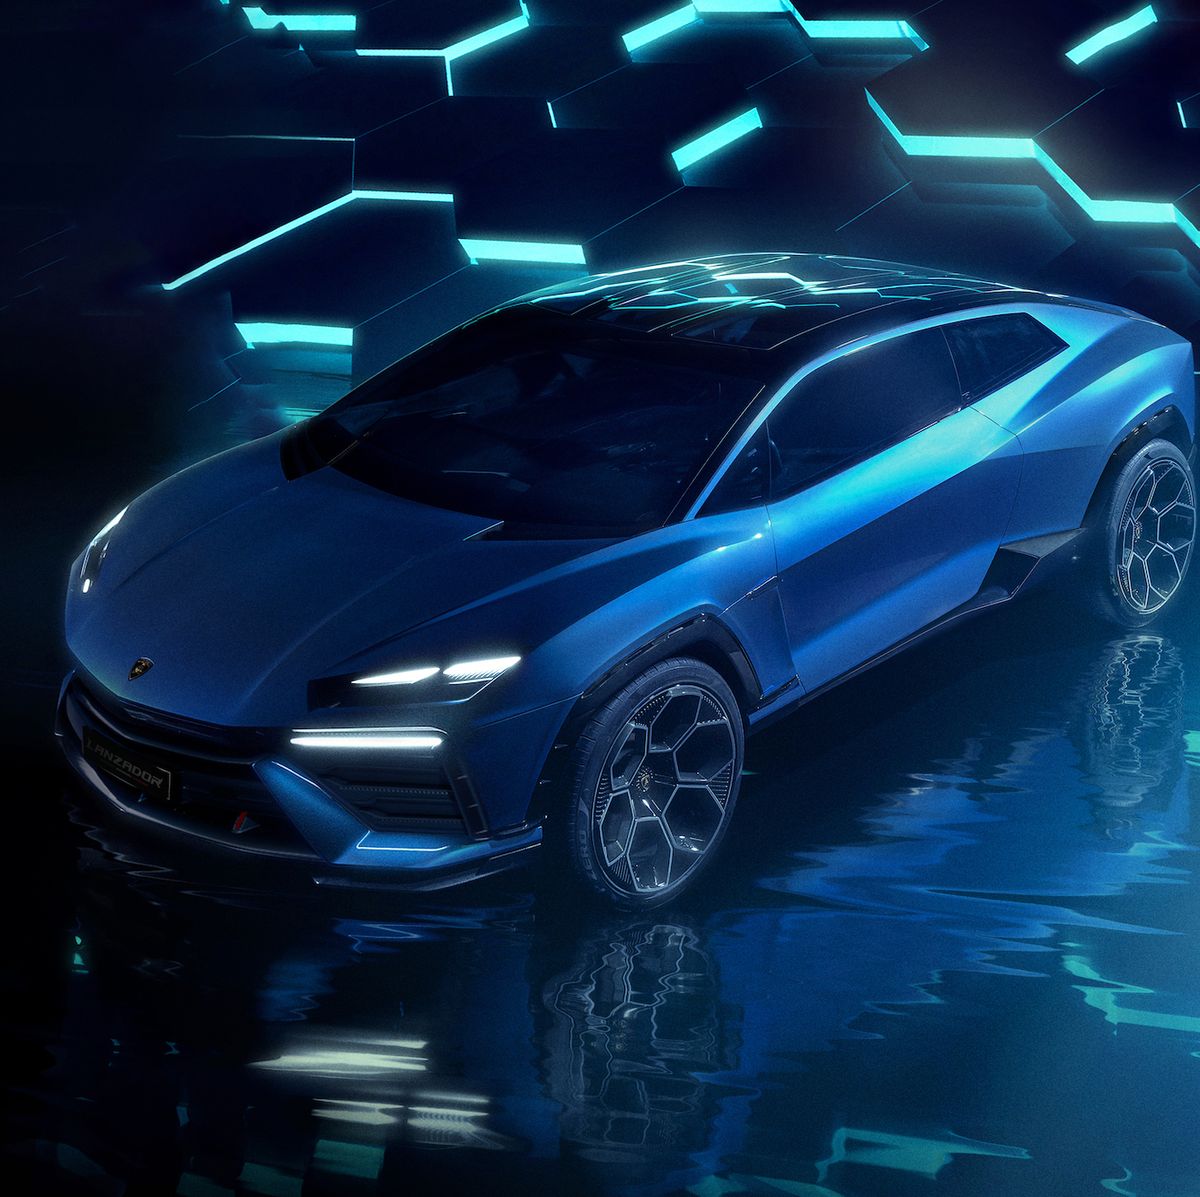 Lamborghini: Current Tech Not Good Enough For Electric Supercar